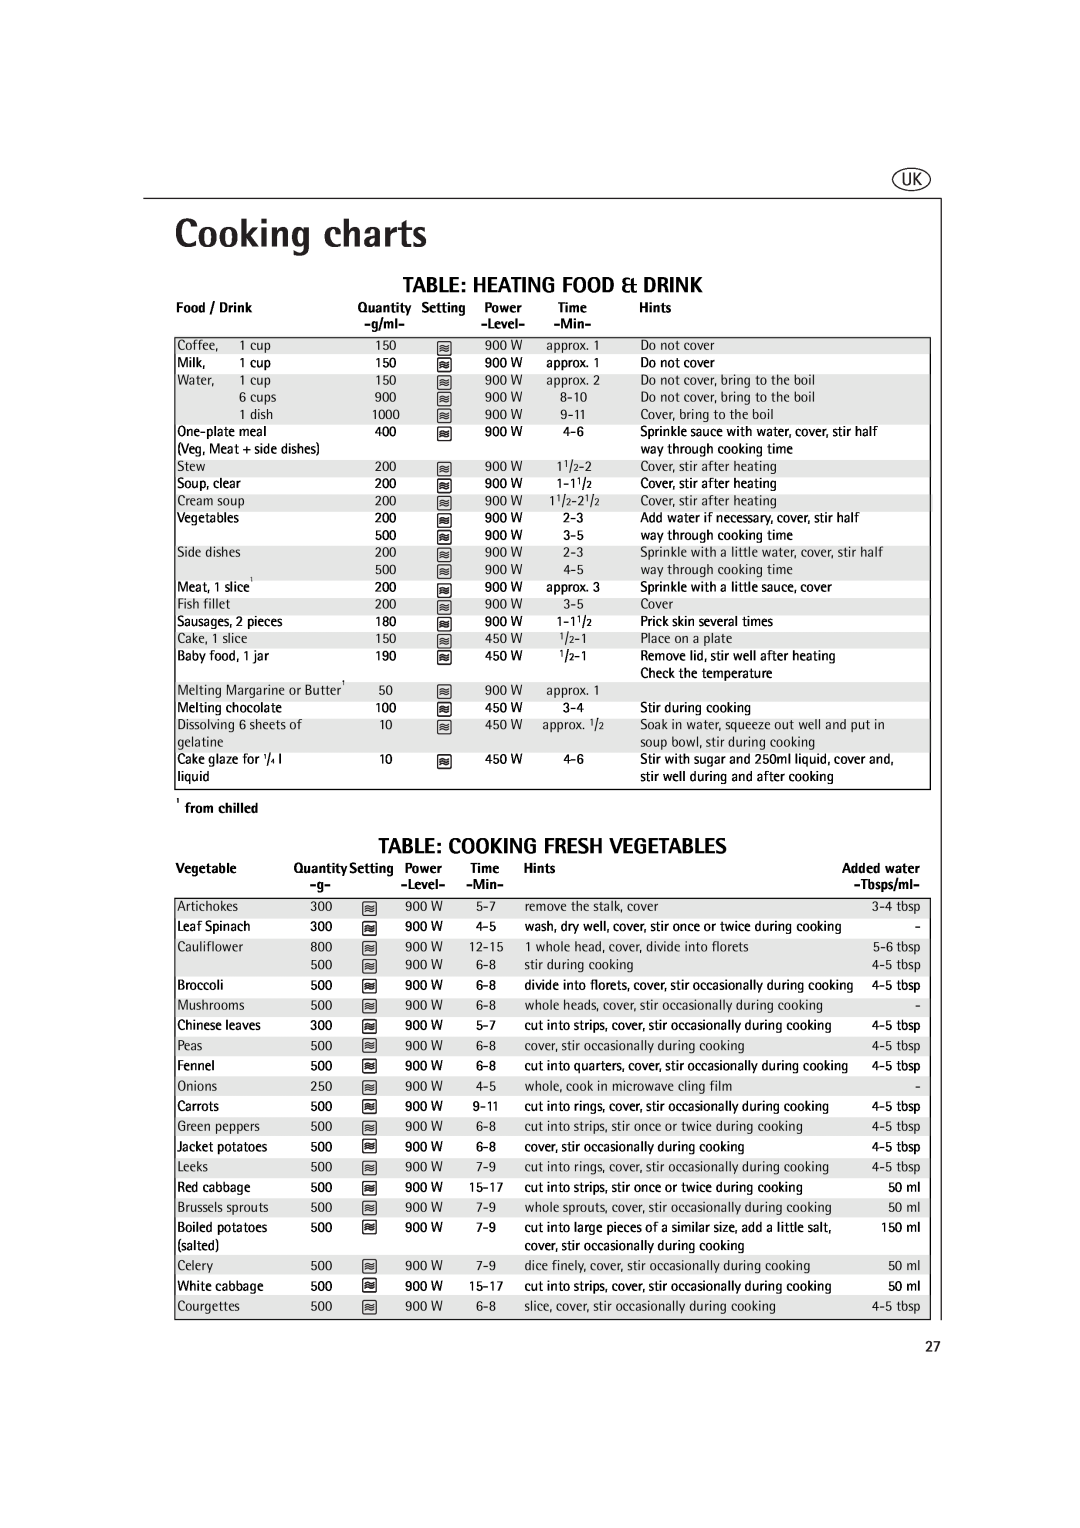 AEG MCD2660E Cooking charts, Table Heating Food & Drink, Table Cooking Fresh Vegetables, Food / Drink, Quantity Setting 